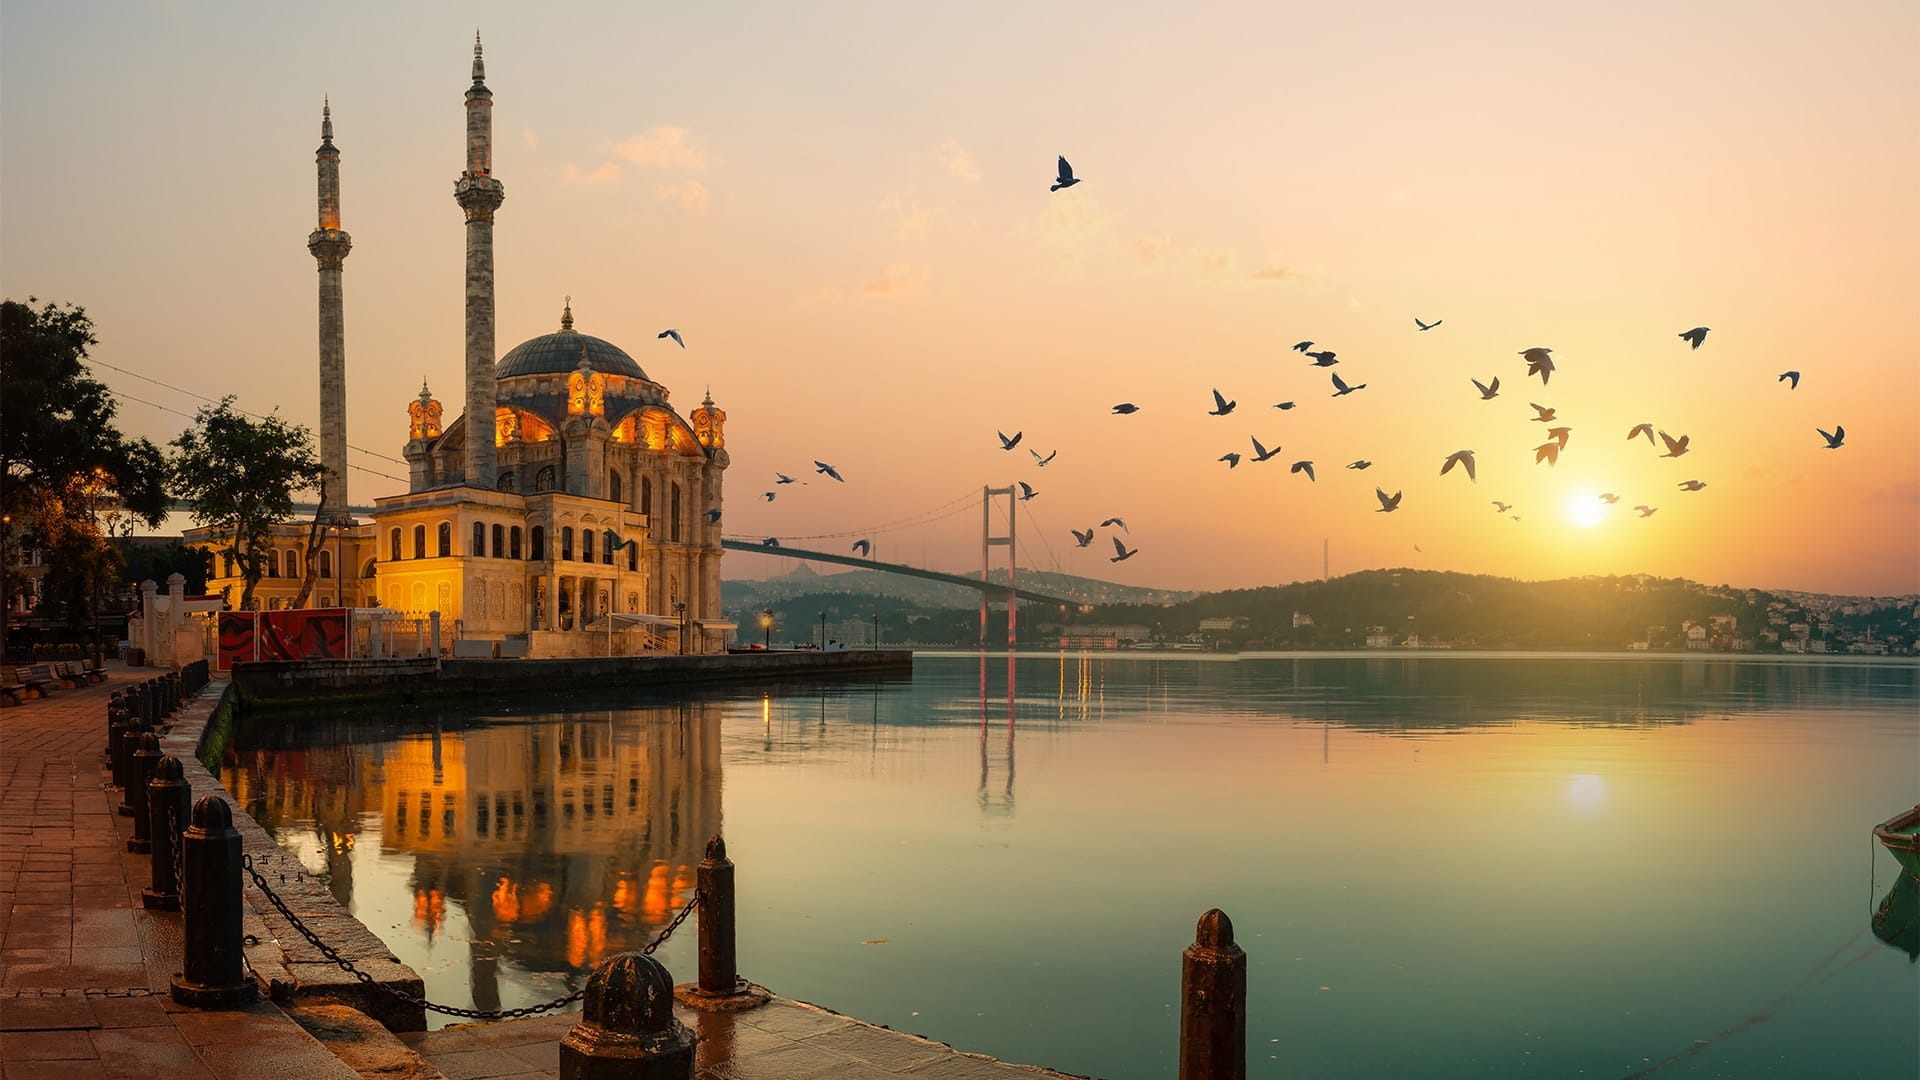 Ortakoy cami - famous and popular landmark in Istanbul, Turkey